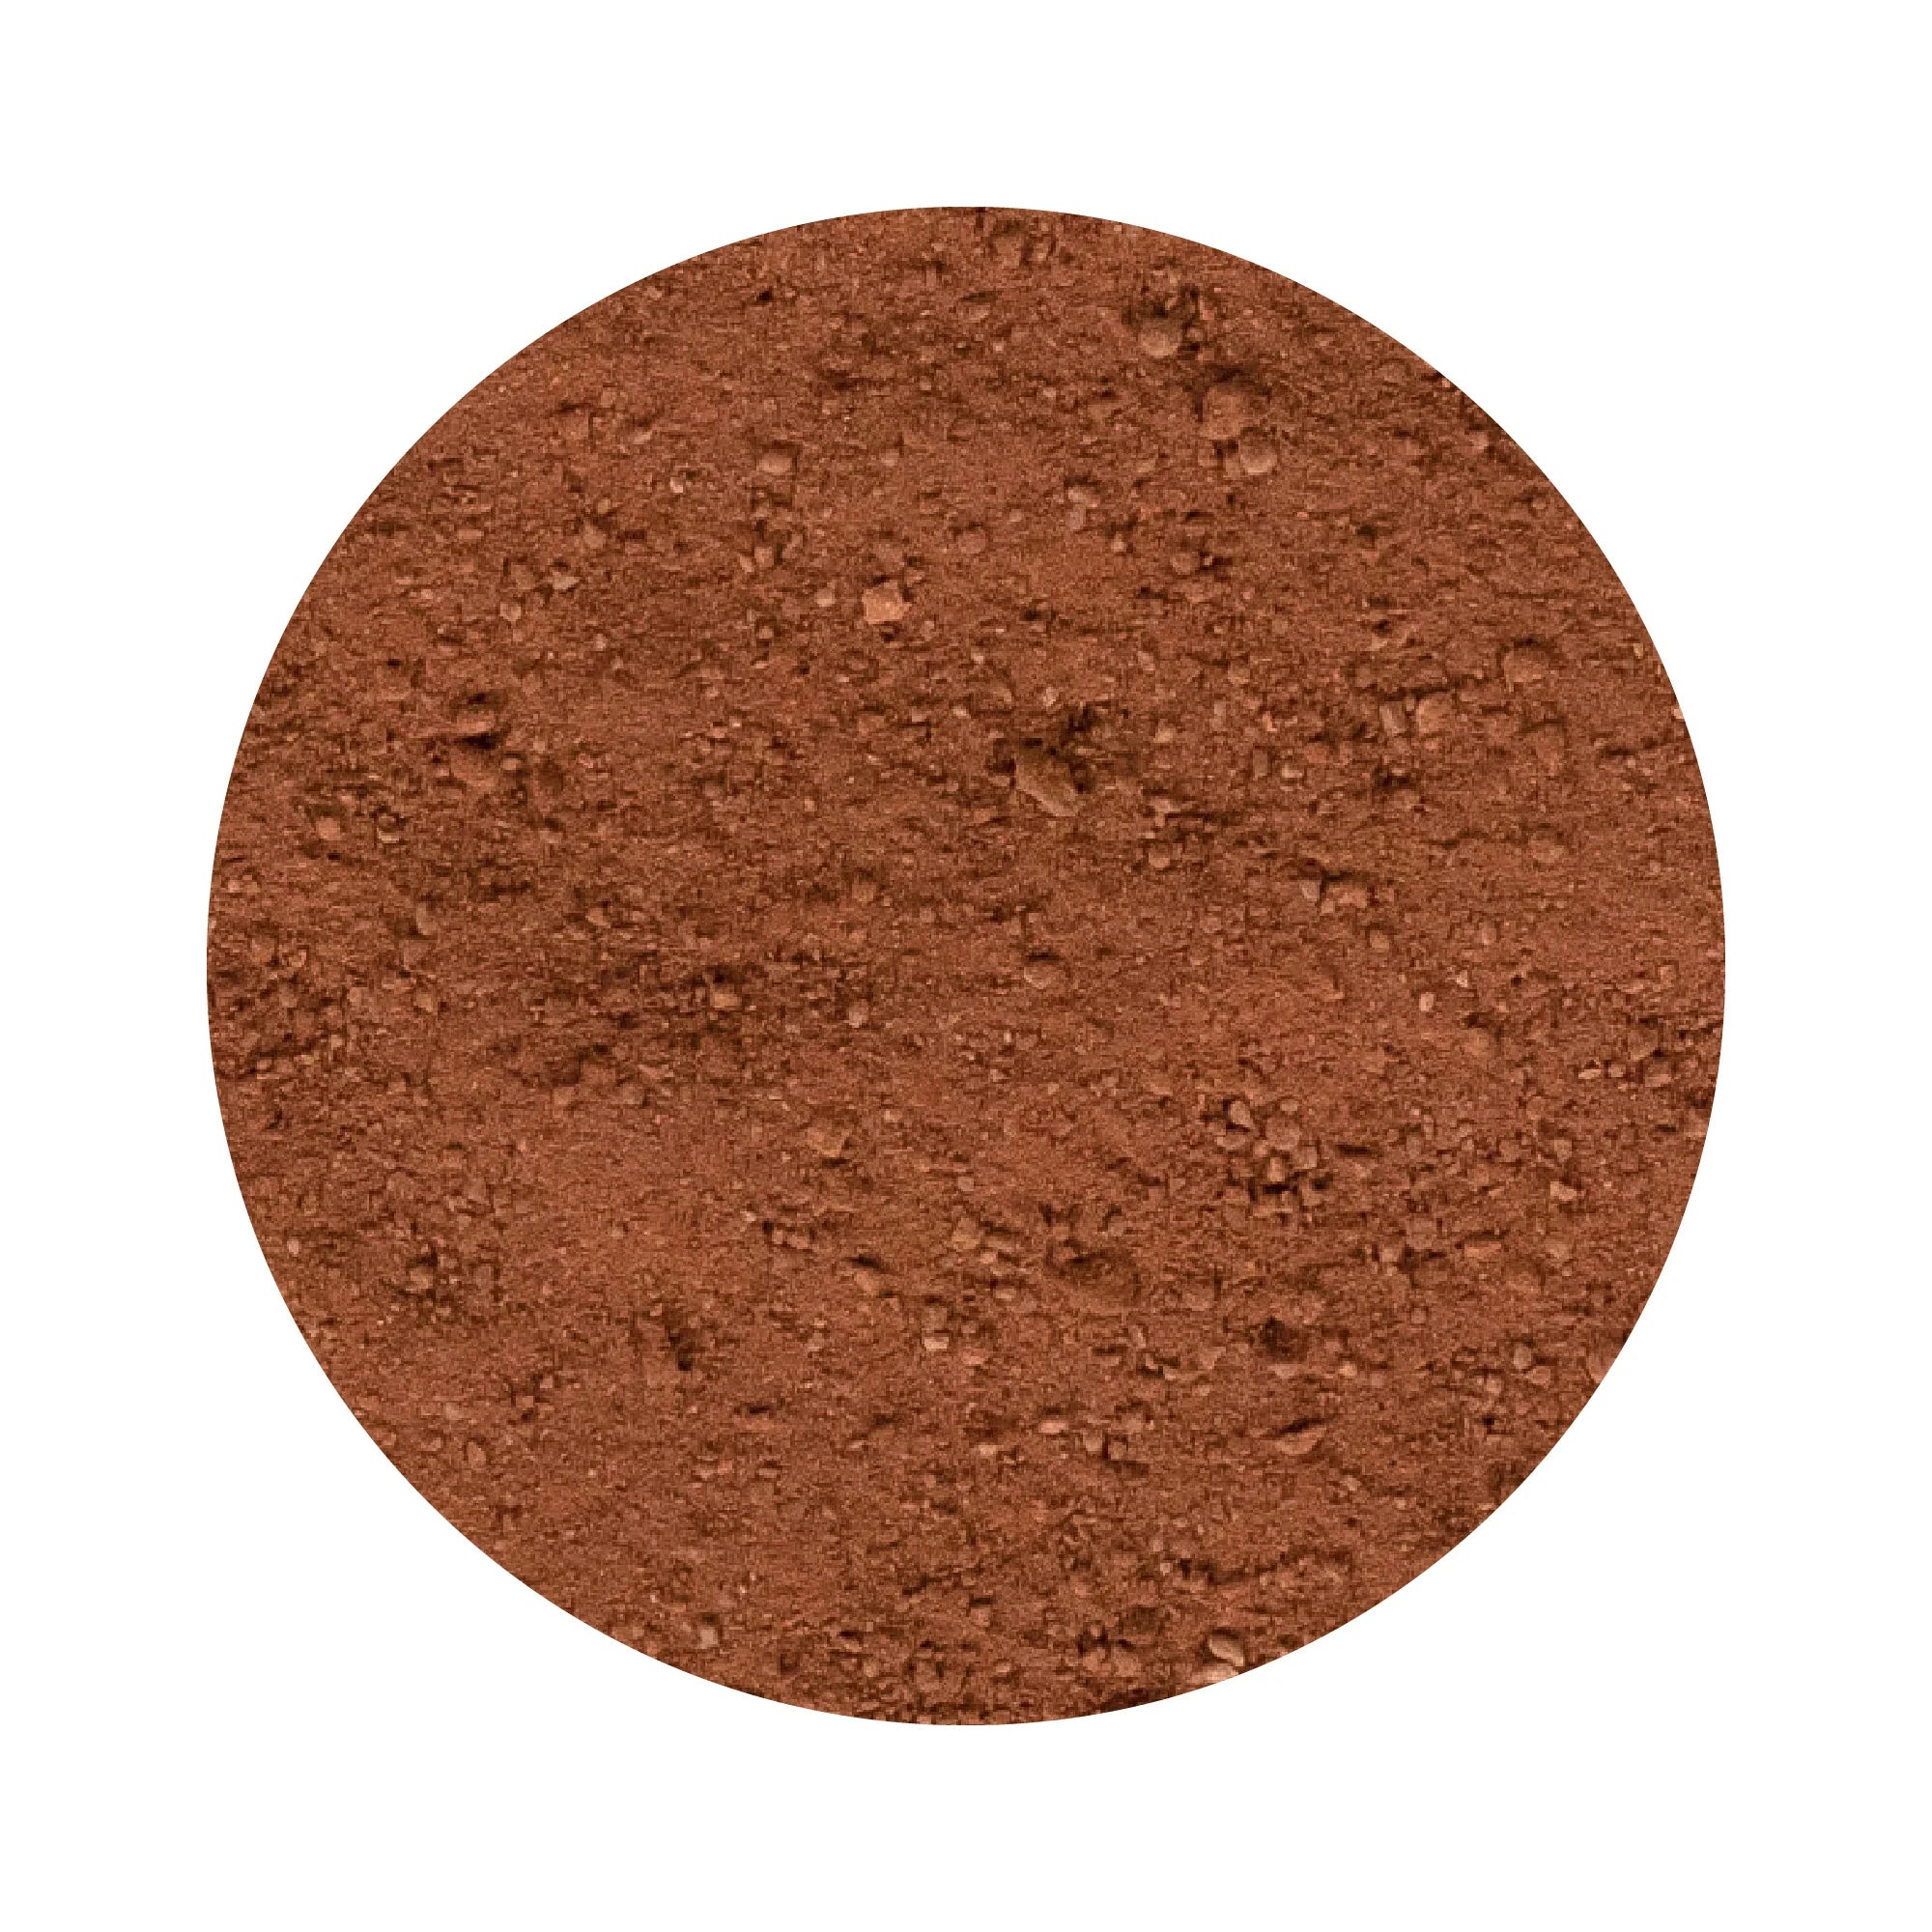 Avazera Organic Raw Cacao Powder 113g